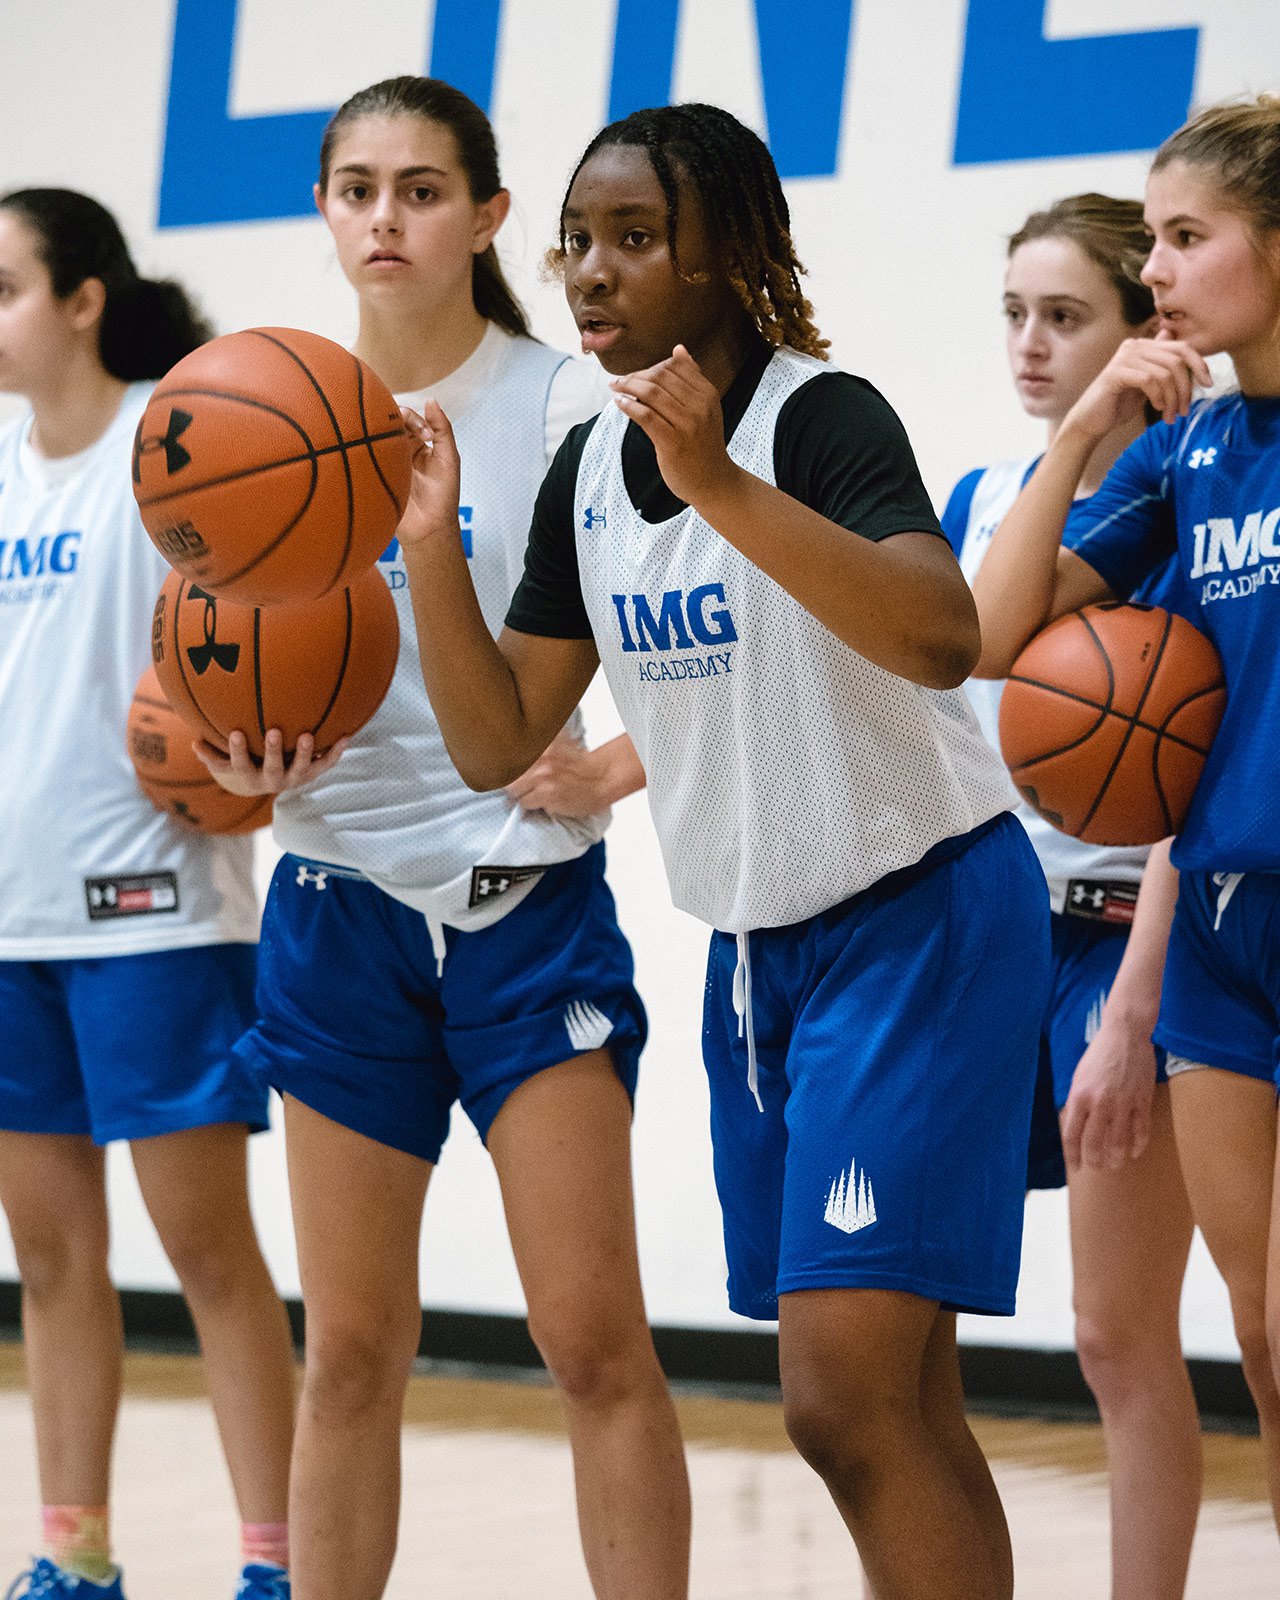 Girls Basketball Camps Girls Basketball Camp IMG Academy